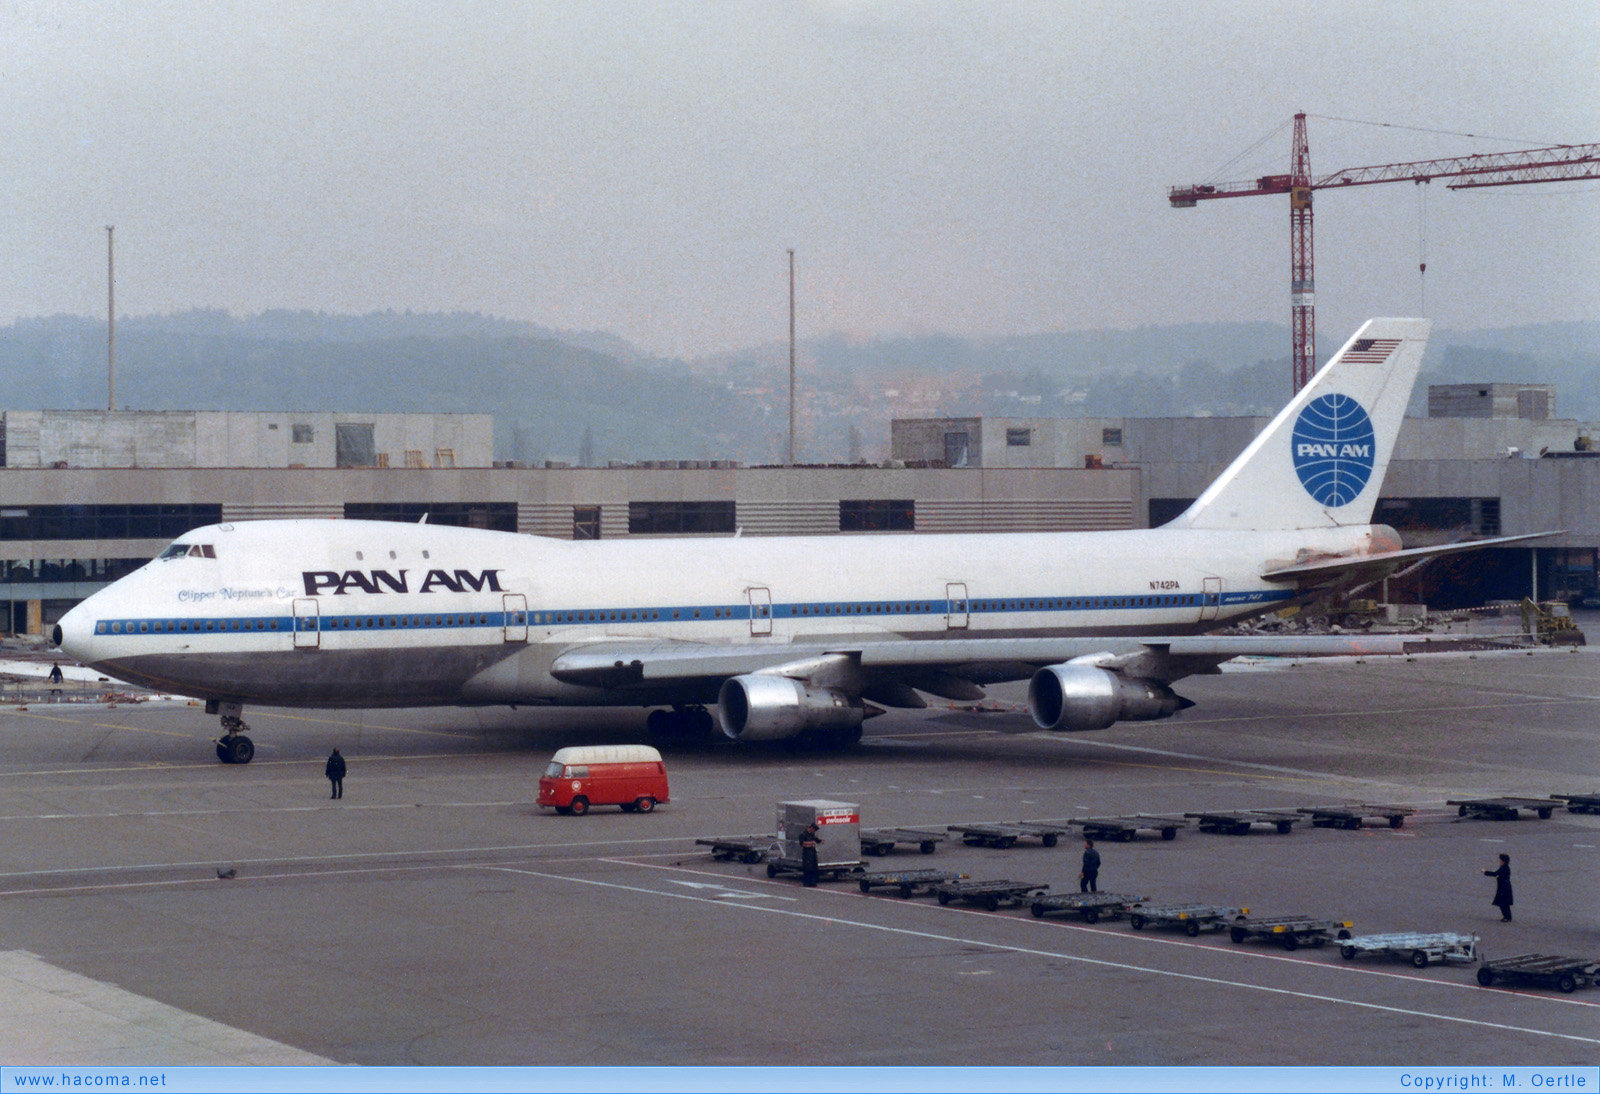 Photo of N742PA - Pan Am Clipper Rainbow / Neptunes Car - Zurich International Airport - Oct 1984